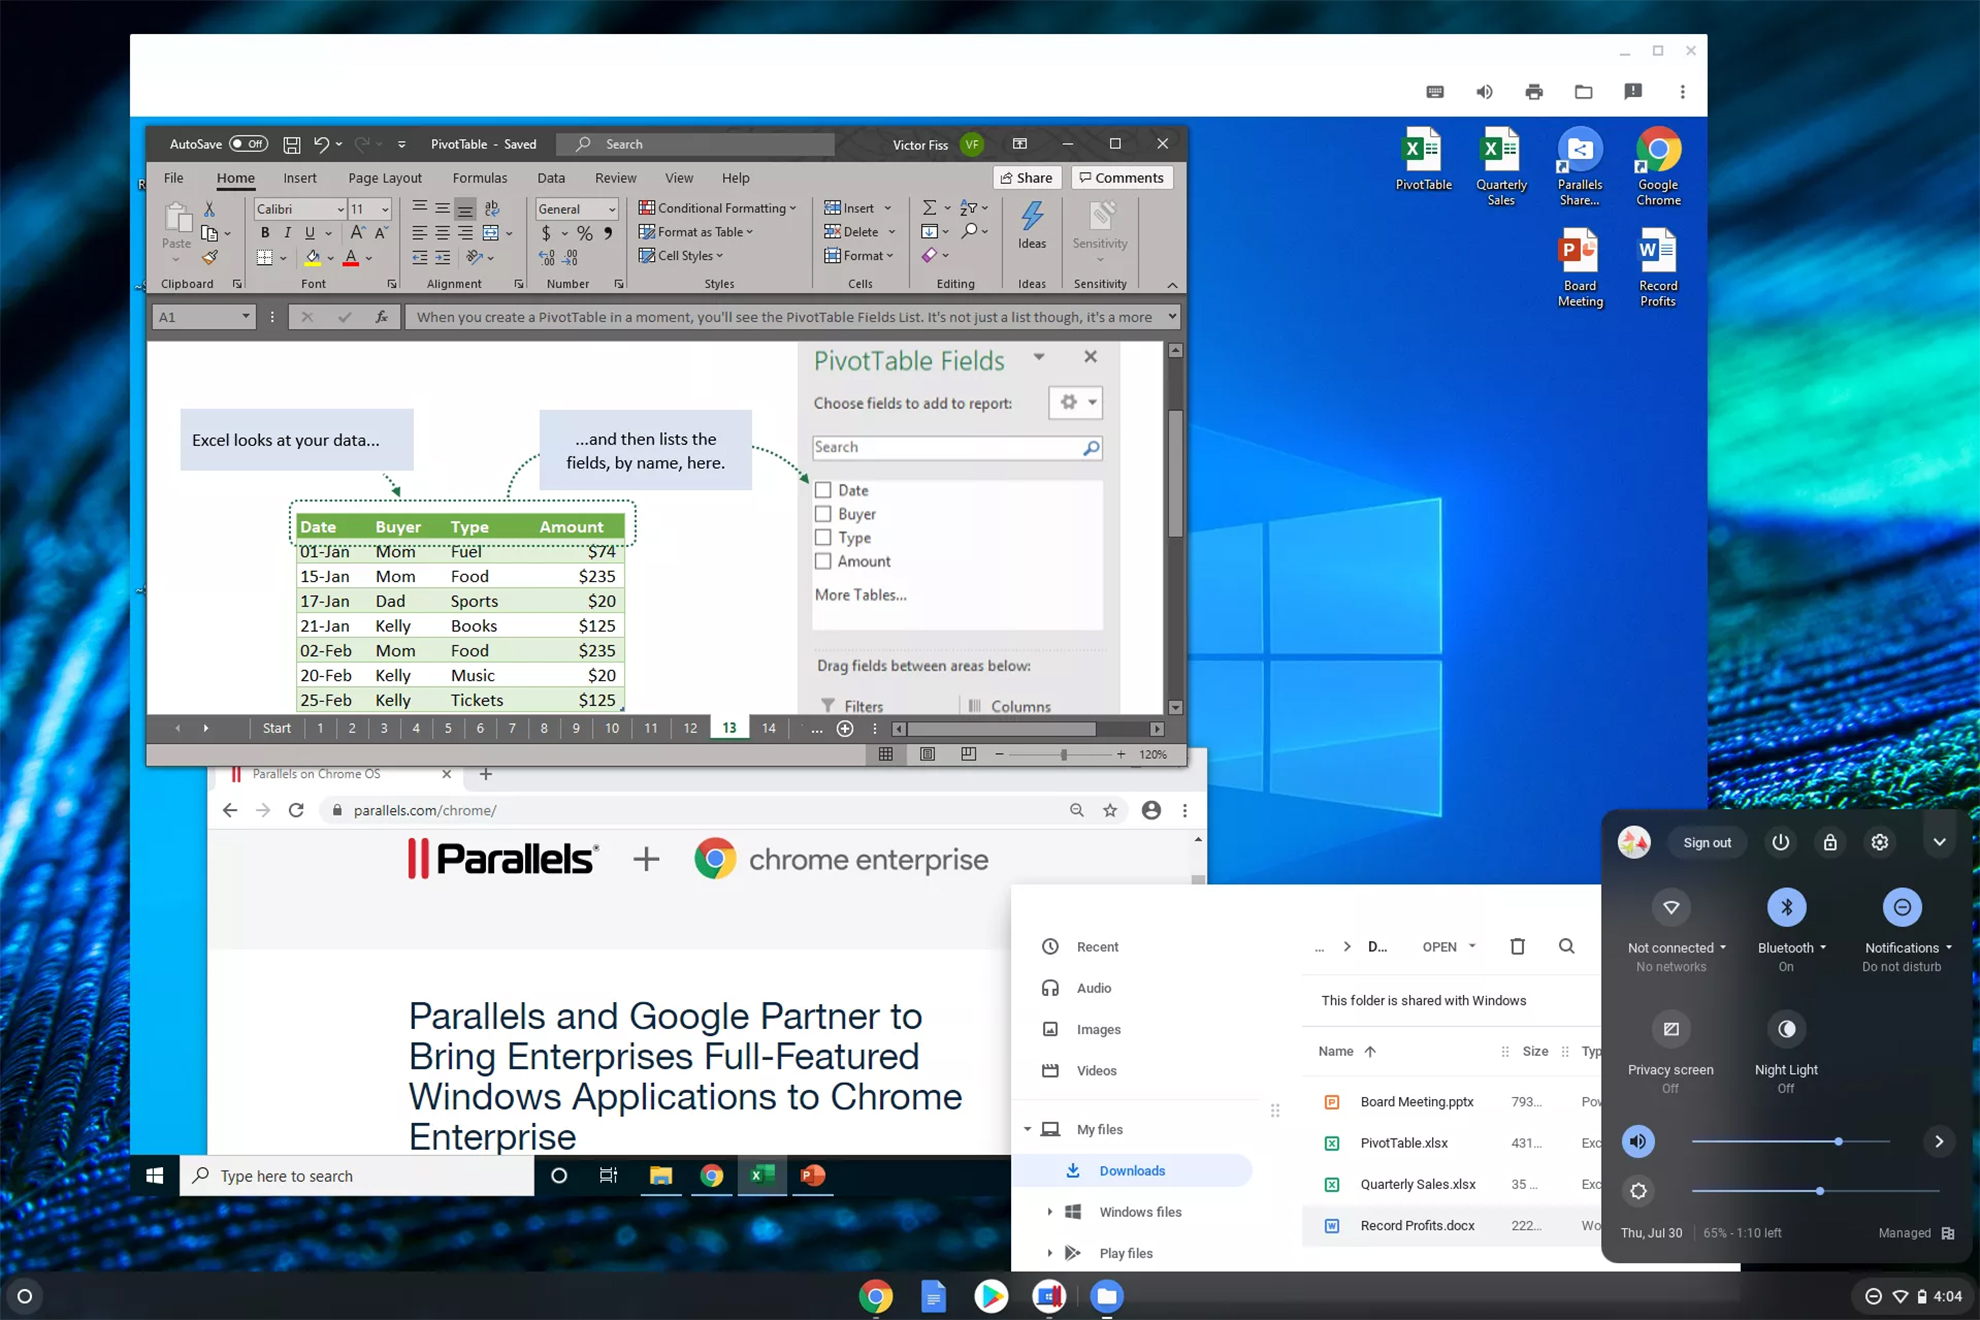 Windows apps on Chrome OS via Parallels